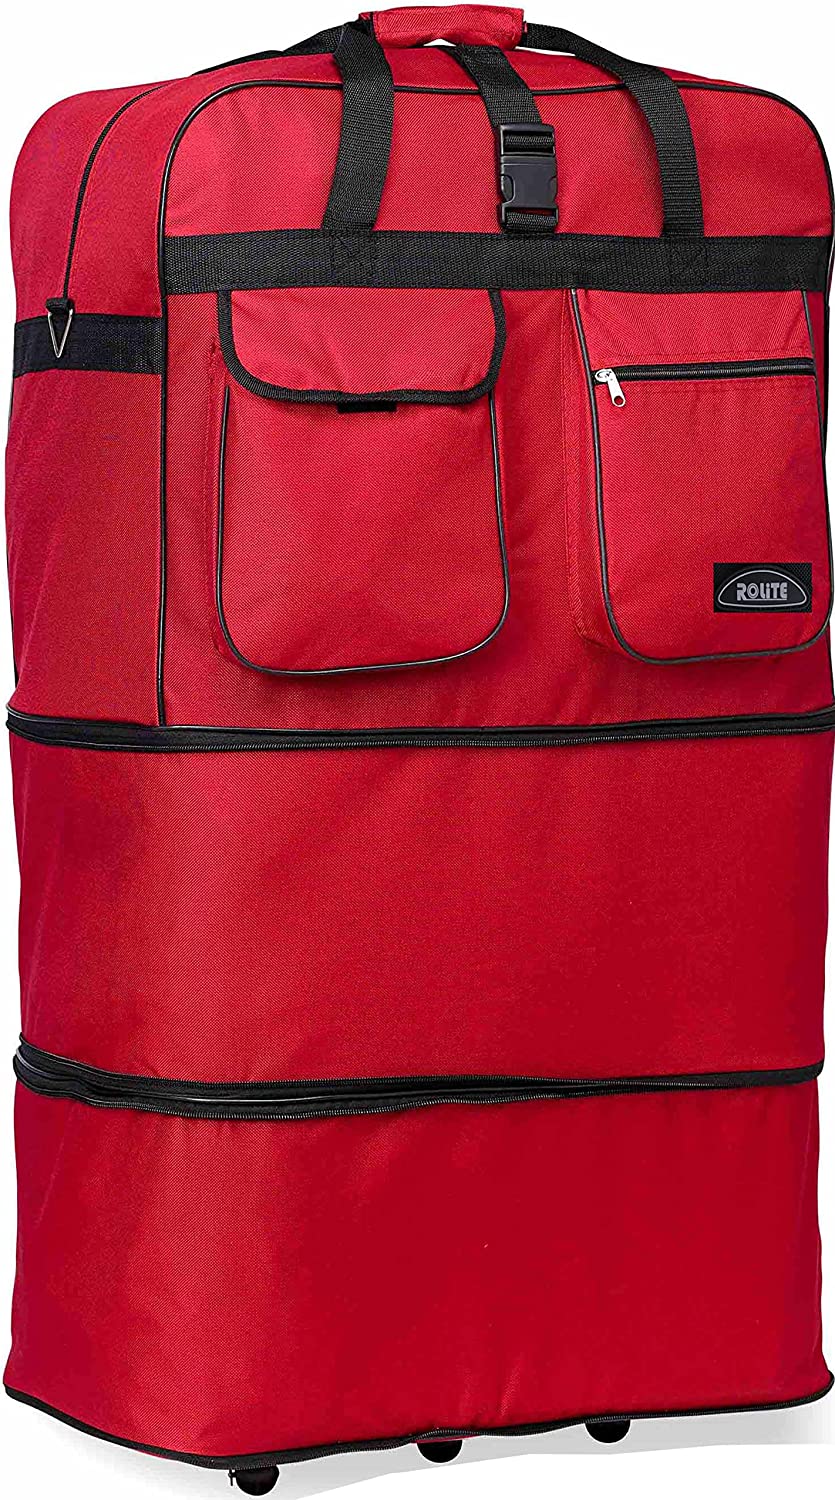 HiPack Wheel Bag Rolling Duffel Bag 40 inch Red (PW40 Red)